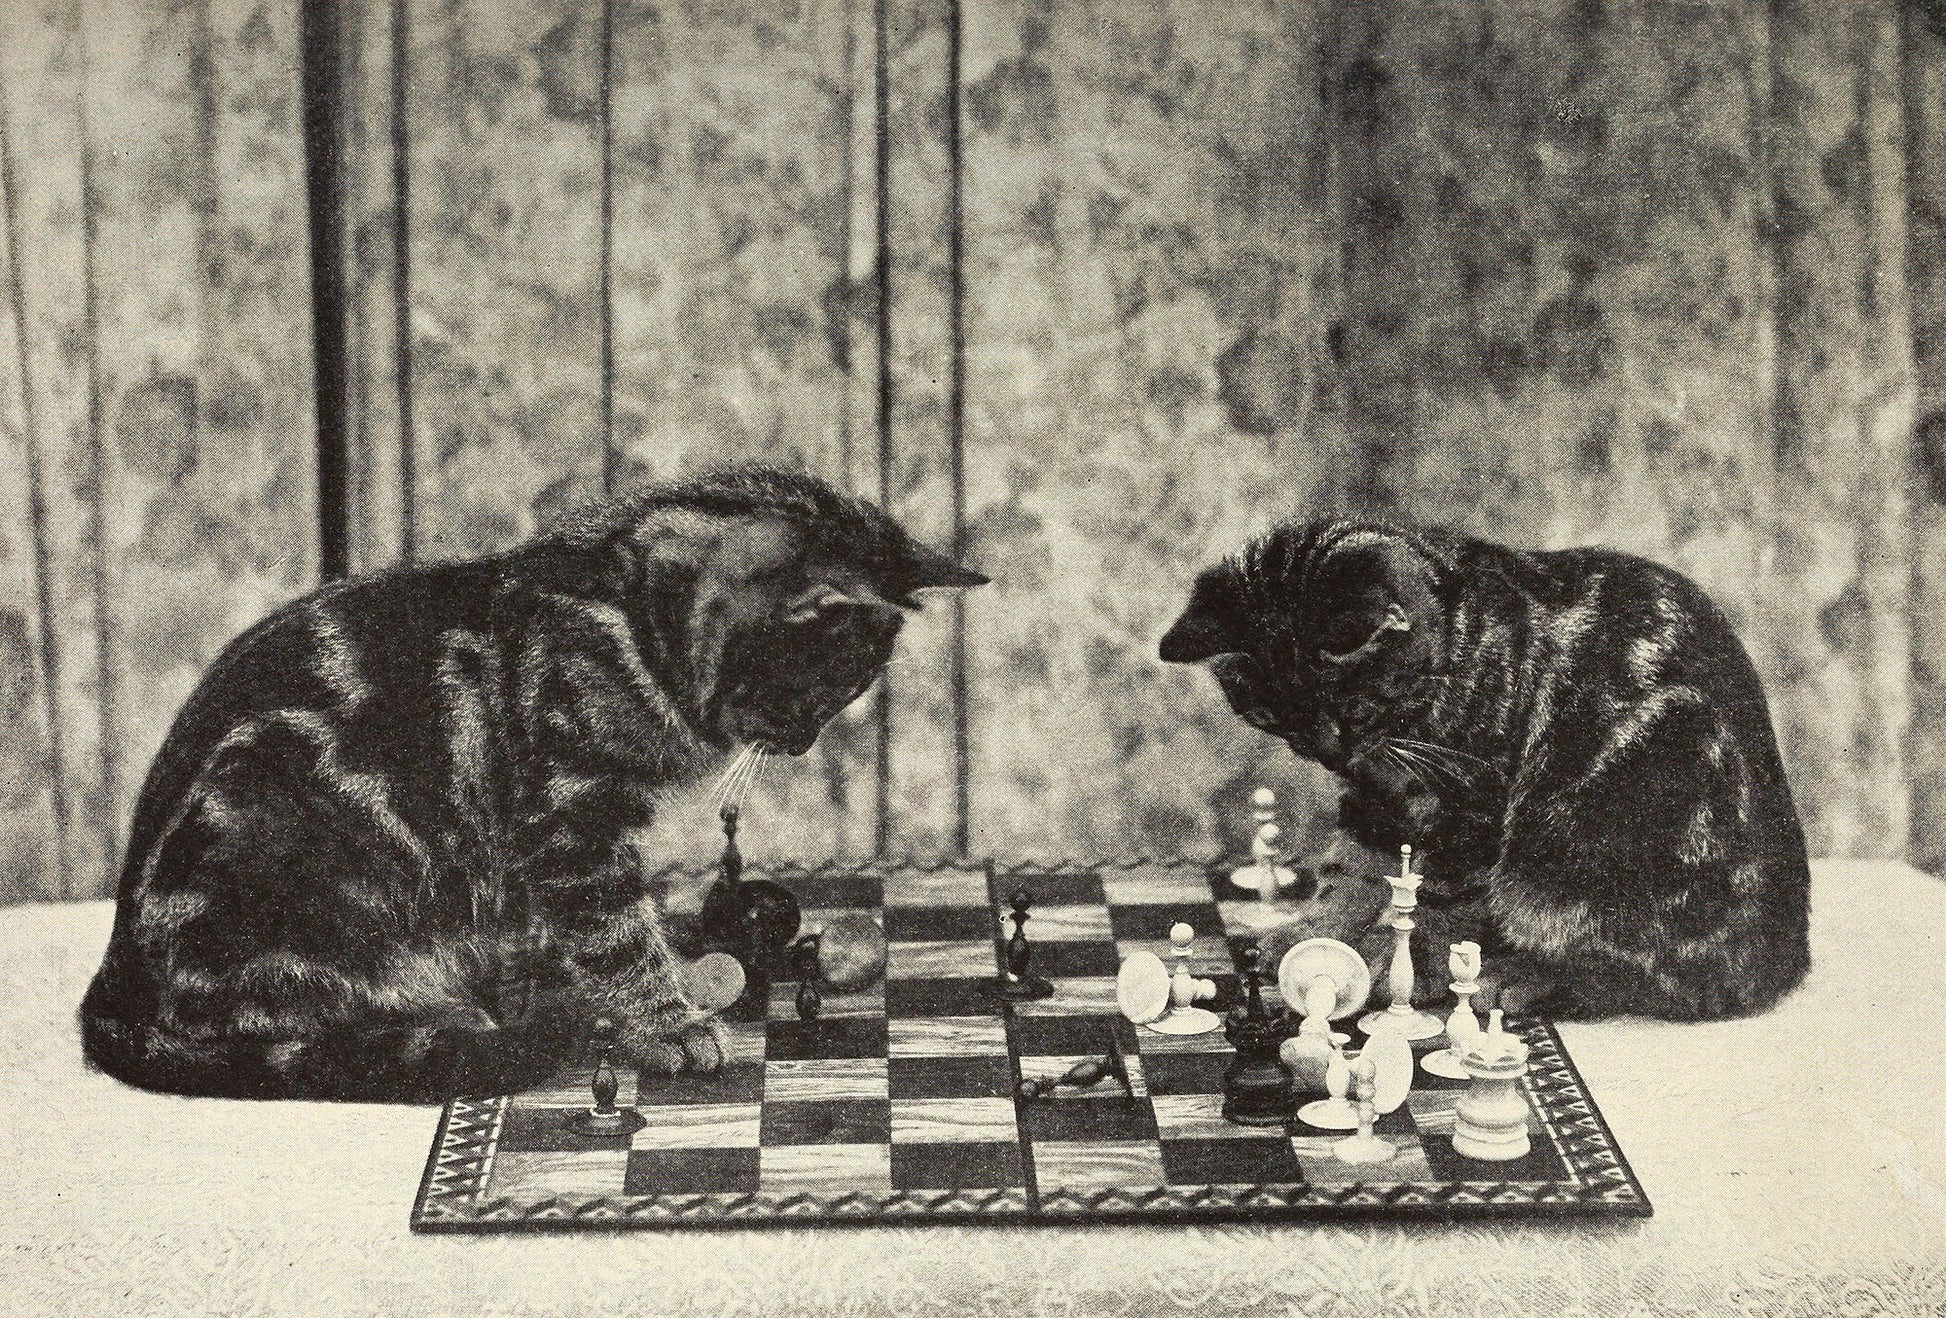 Kittens playing chess photograph (1920s) | Animal wall art prints | Sarah J Eddy Posters, Prints, & Visual Artwork The Trumpet Shop   